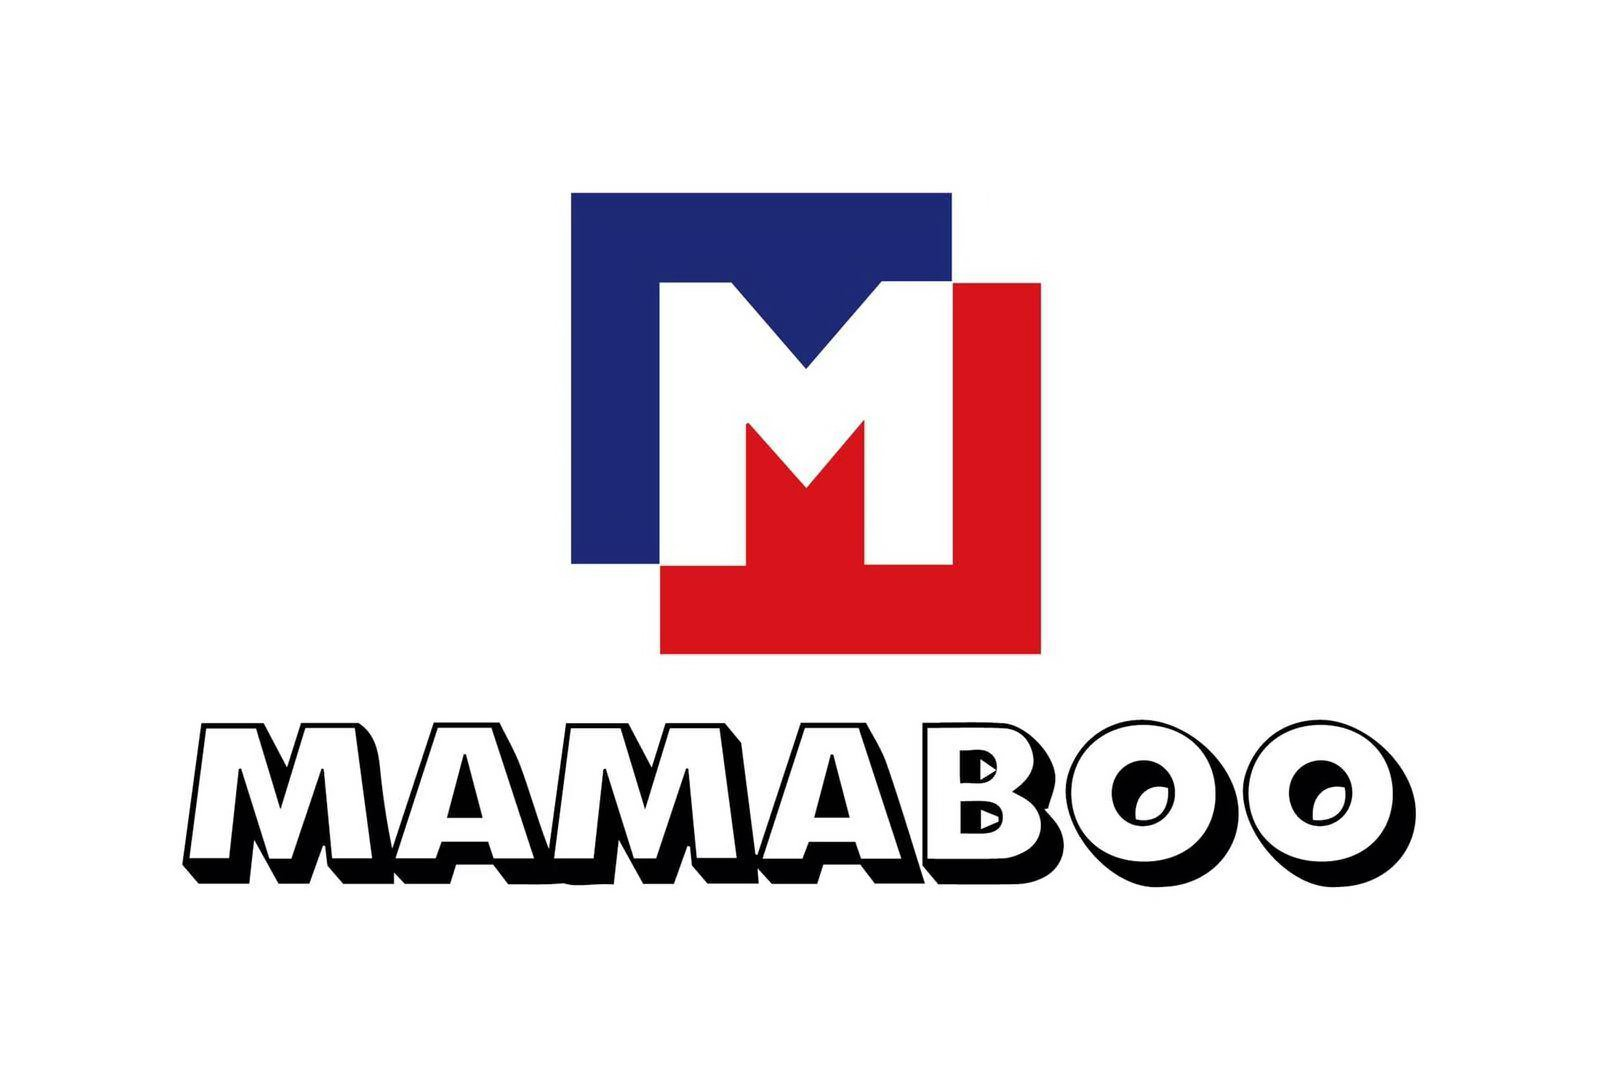 MAMABOO